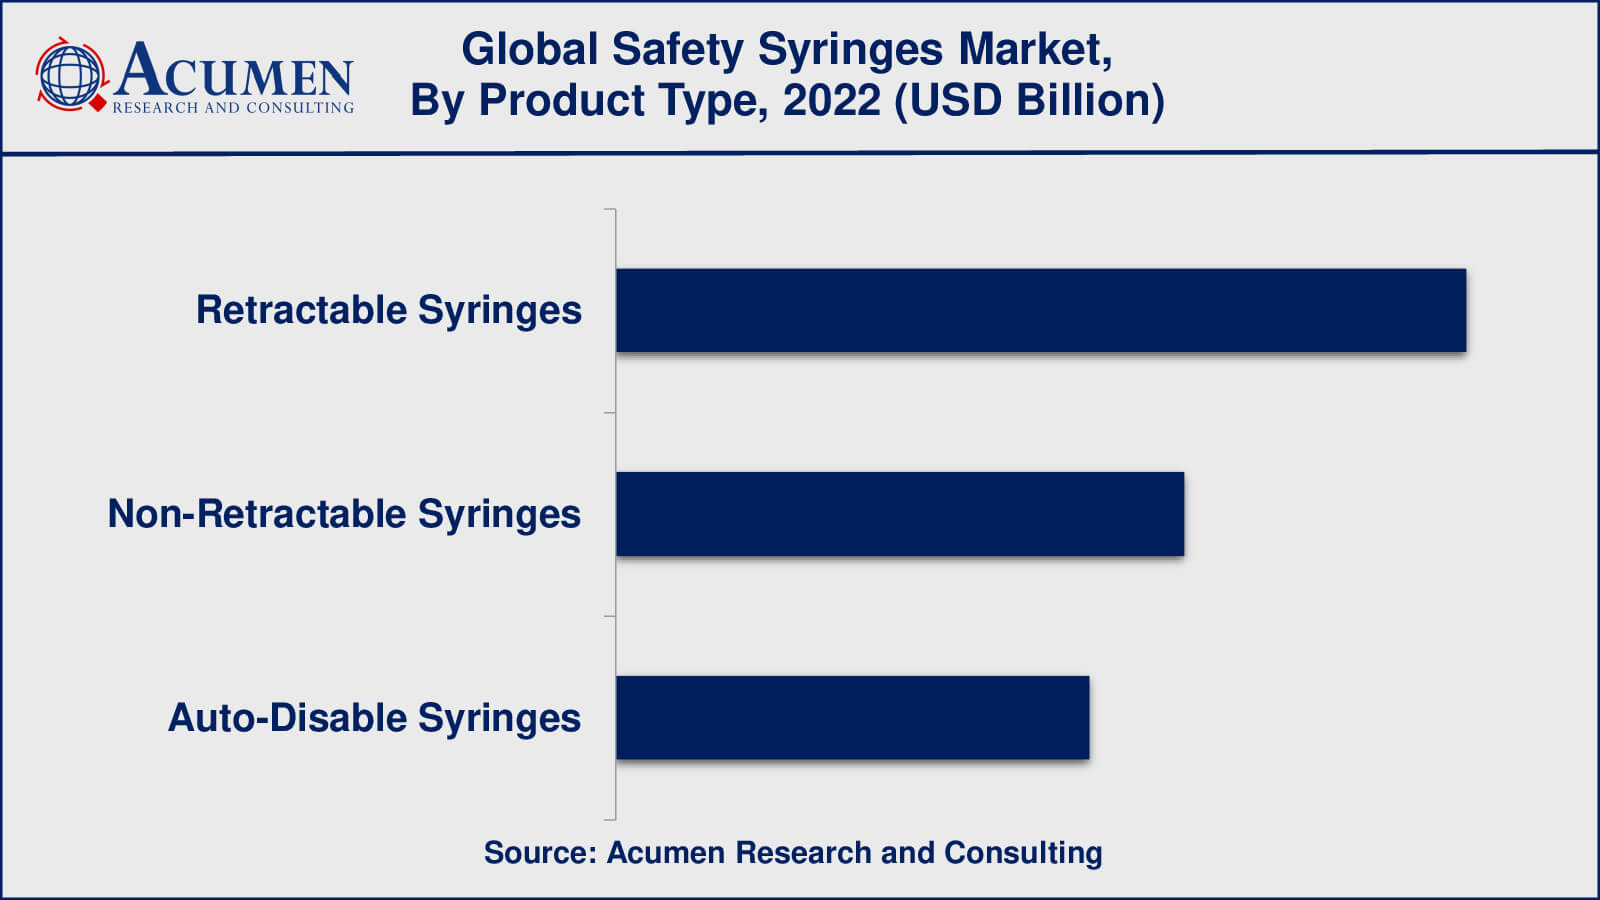 Safety Syringes Market Drivers